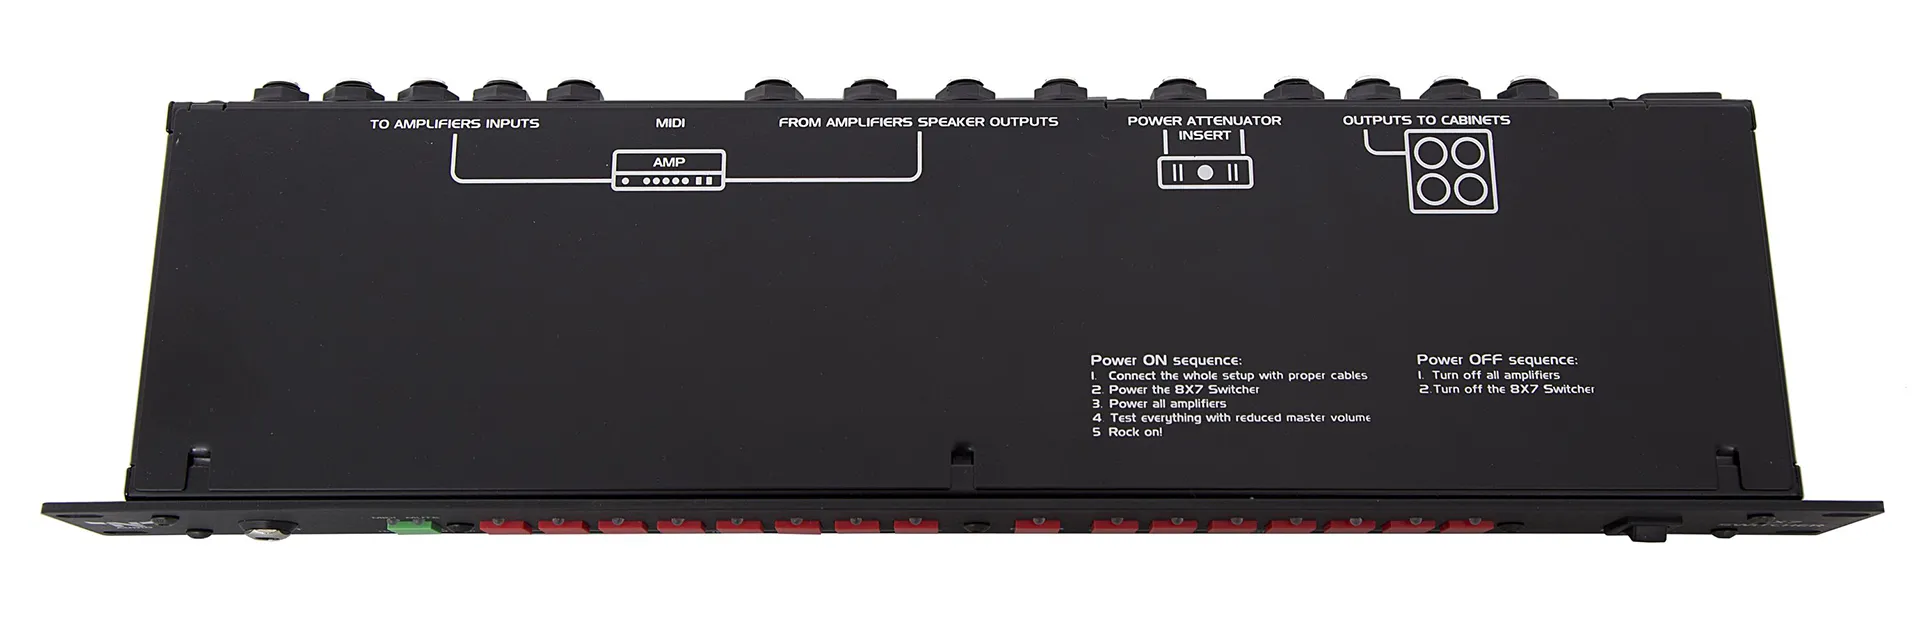 8X7 Amp Cabinet Switcher - Top Panel